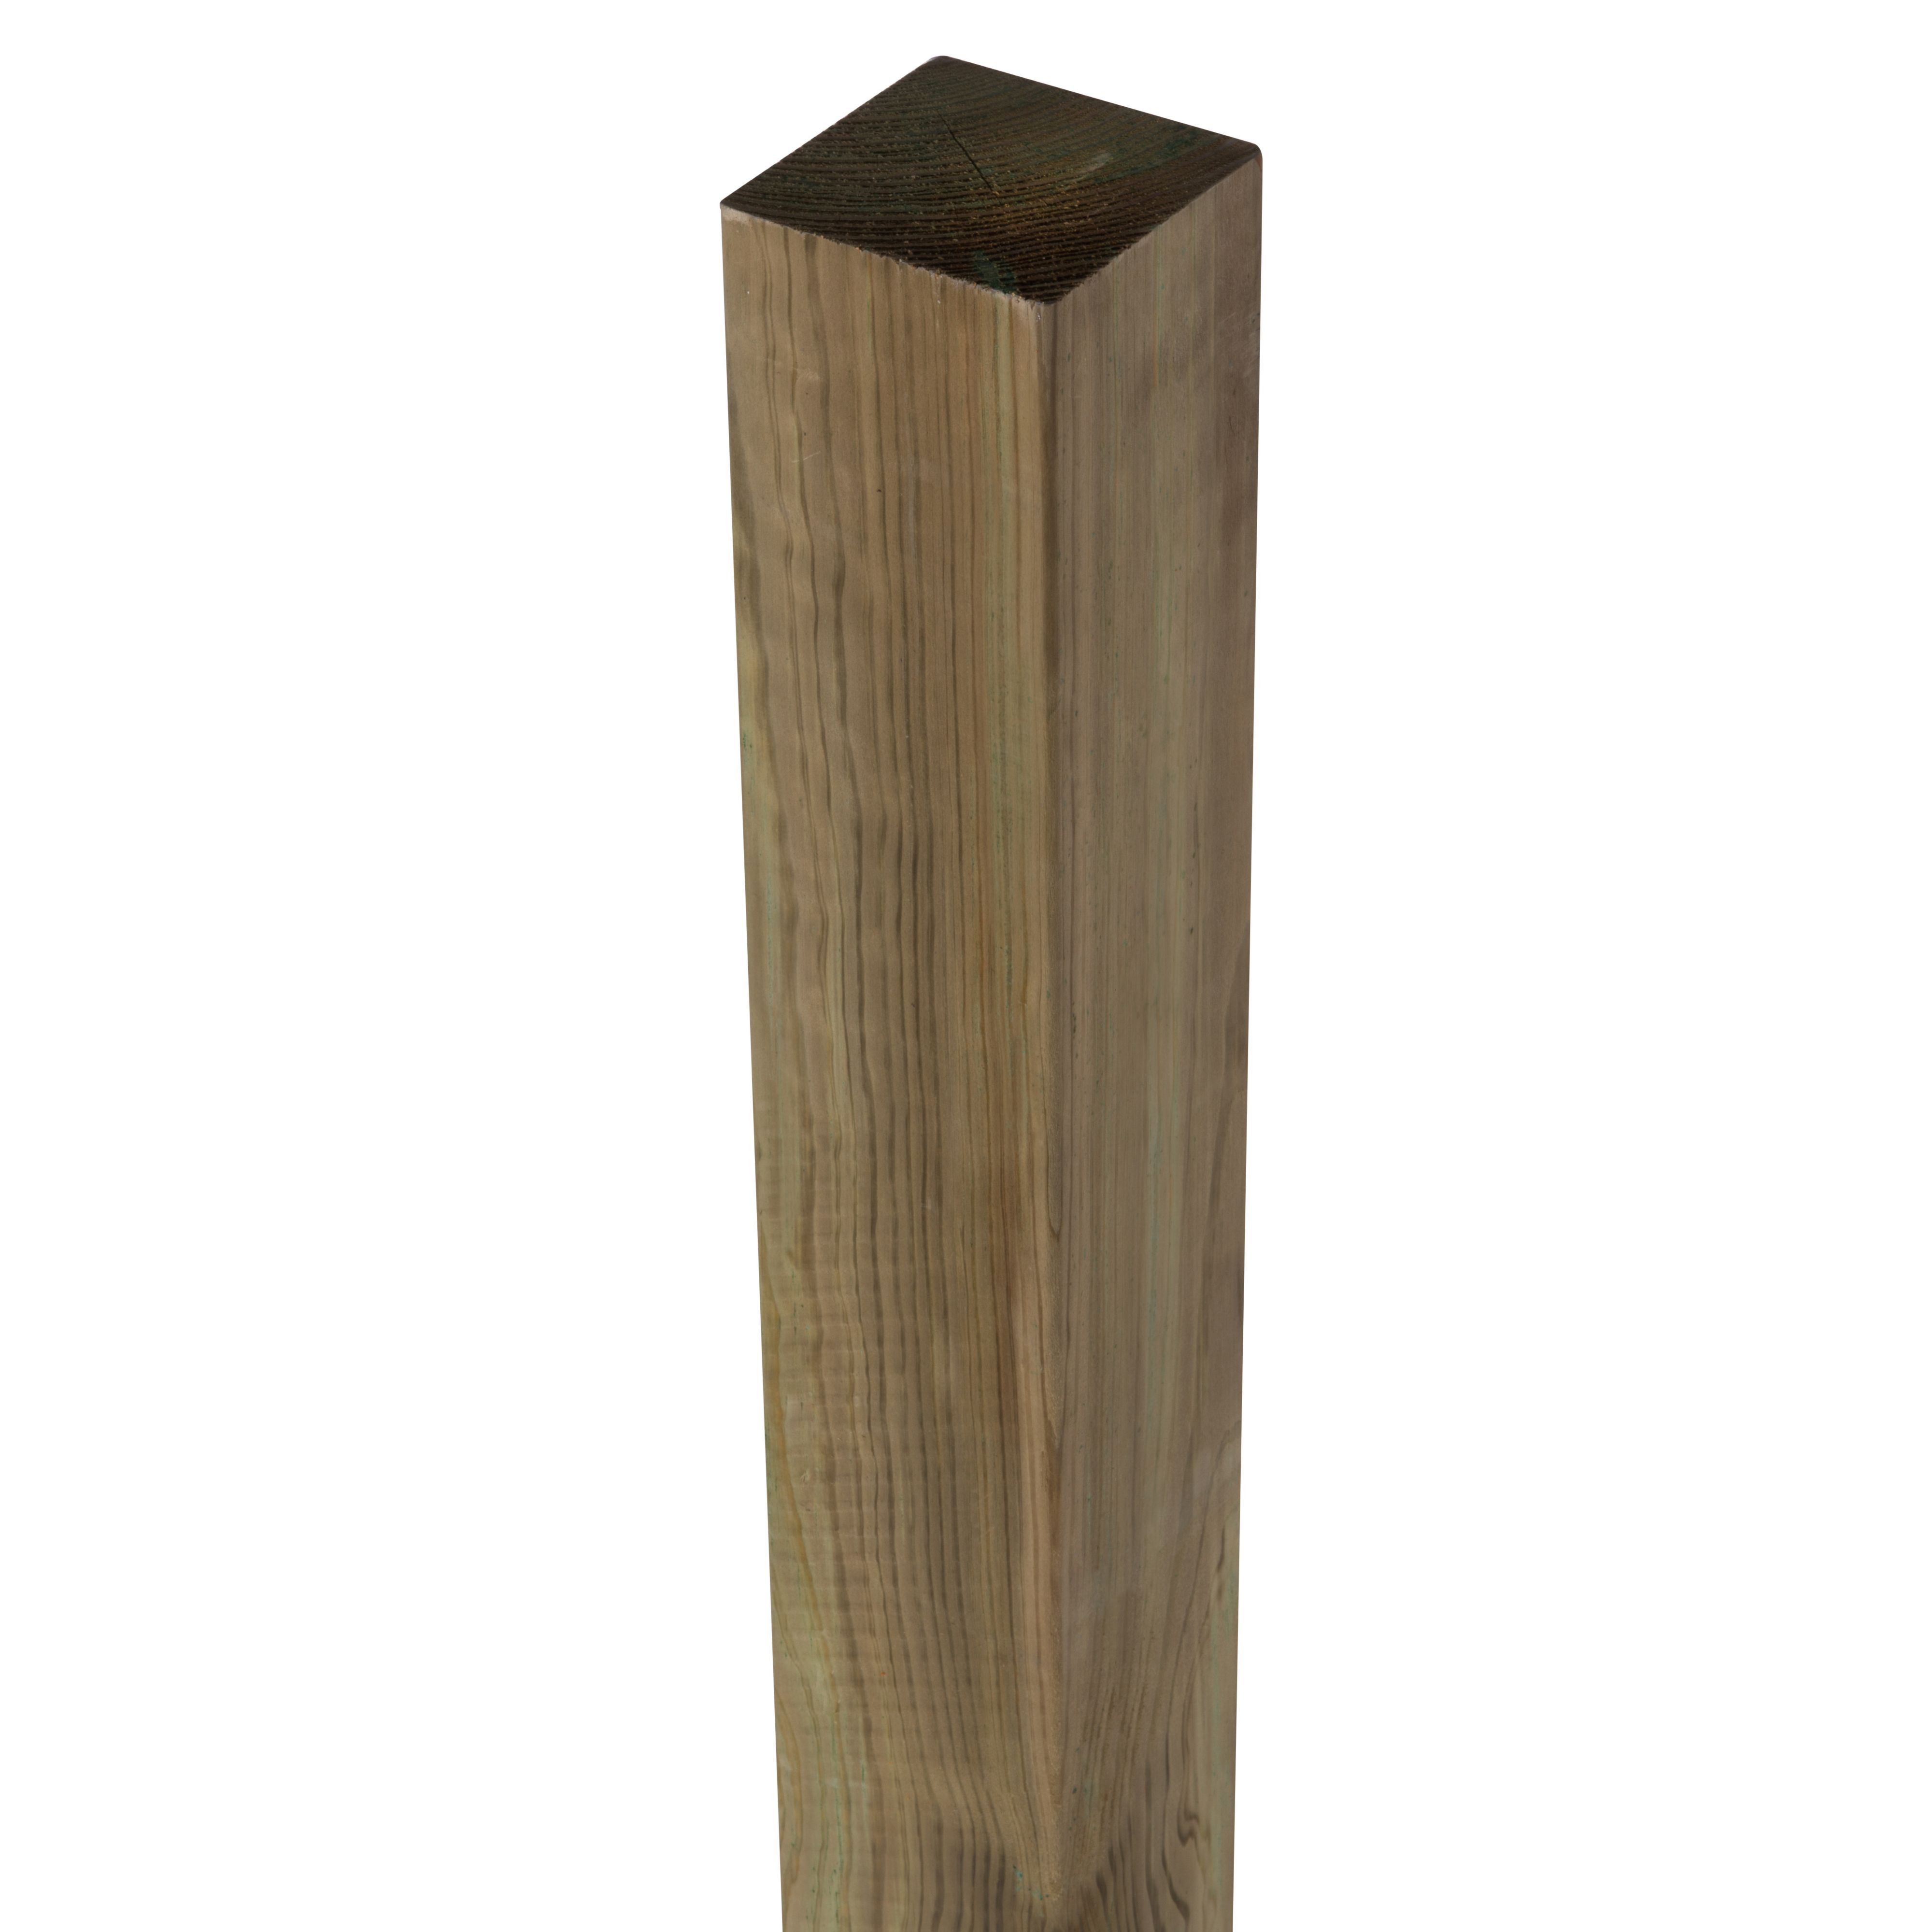 Klikstrom UC4 Natural Wooden Fence post (H)2.4m (W)90mm